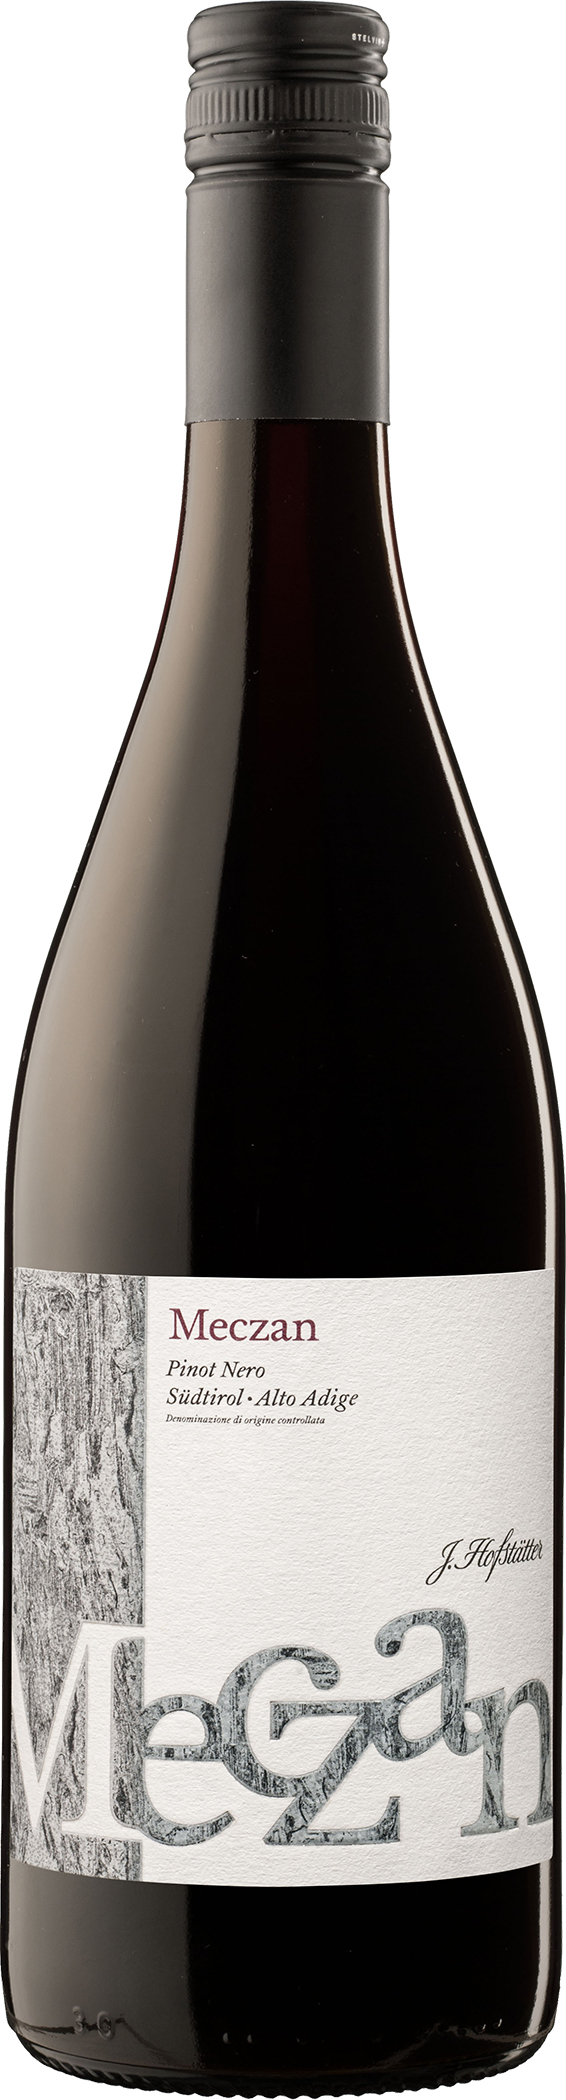 J.Hofstatter Meczan Pinot Nero 21　ｼﾞｮｾﾌﾎﾌｽﾀｯﾀｰﾋﾟﾉﾈﾛ